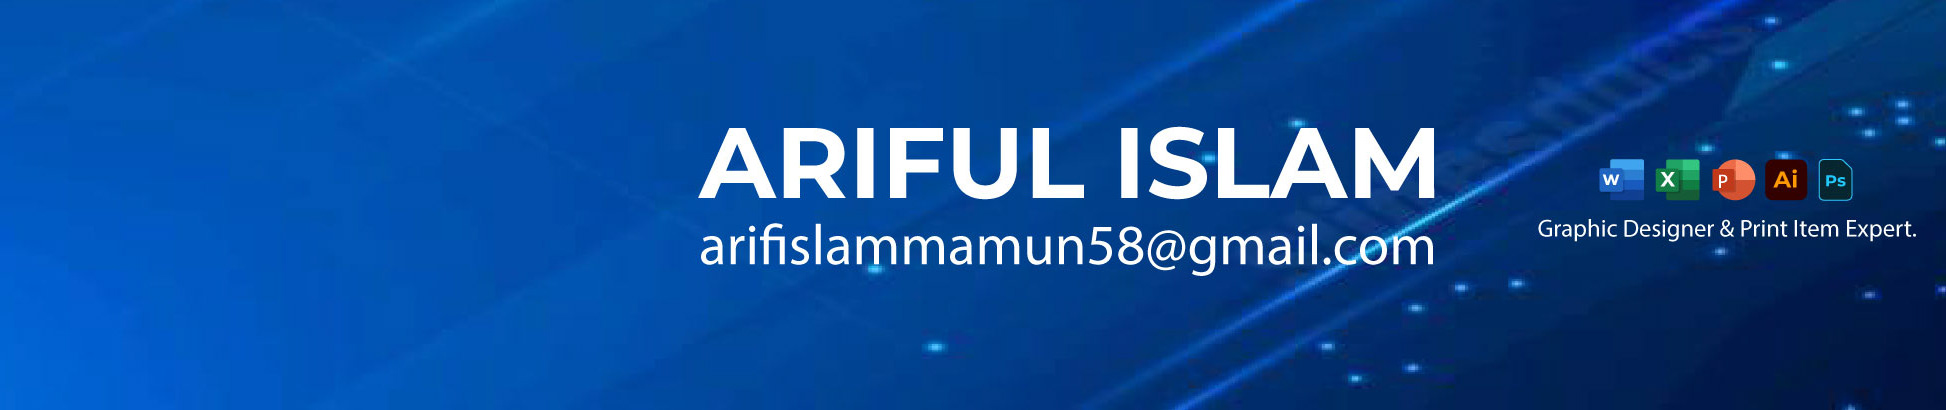 Ariful islam ID: #6028424's profile banner